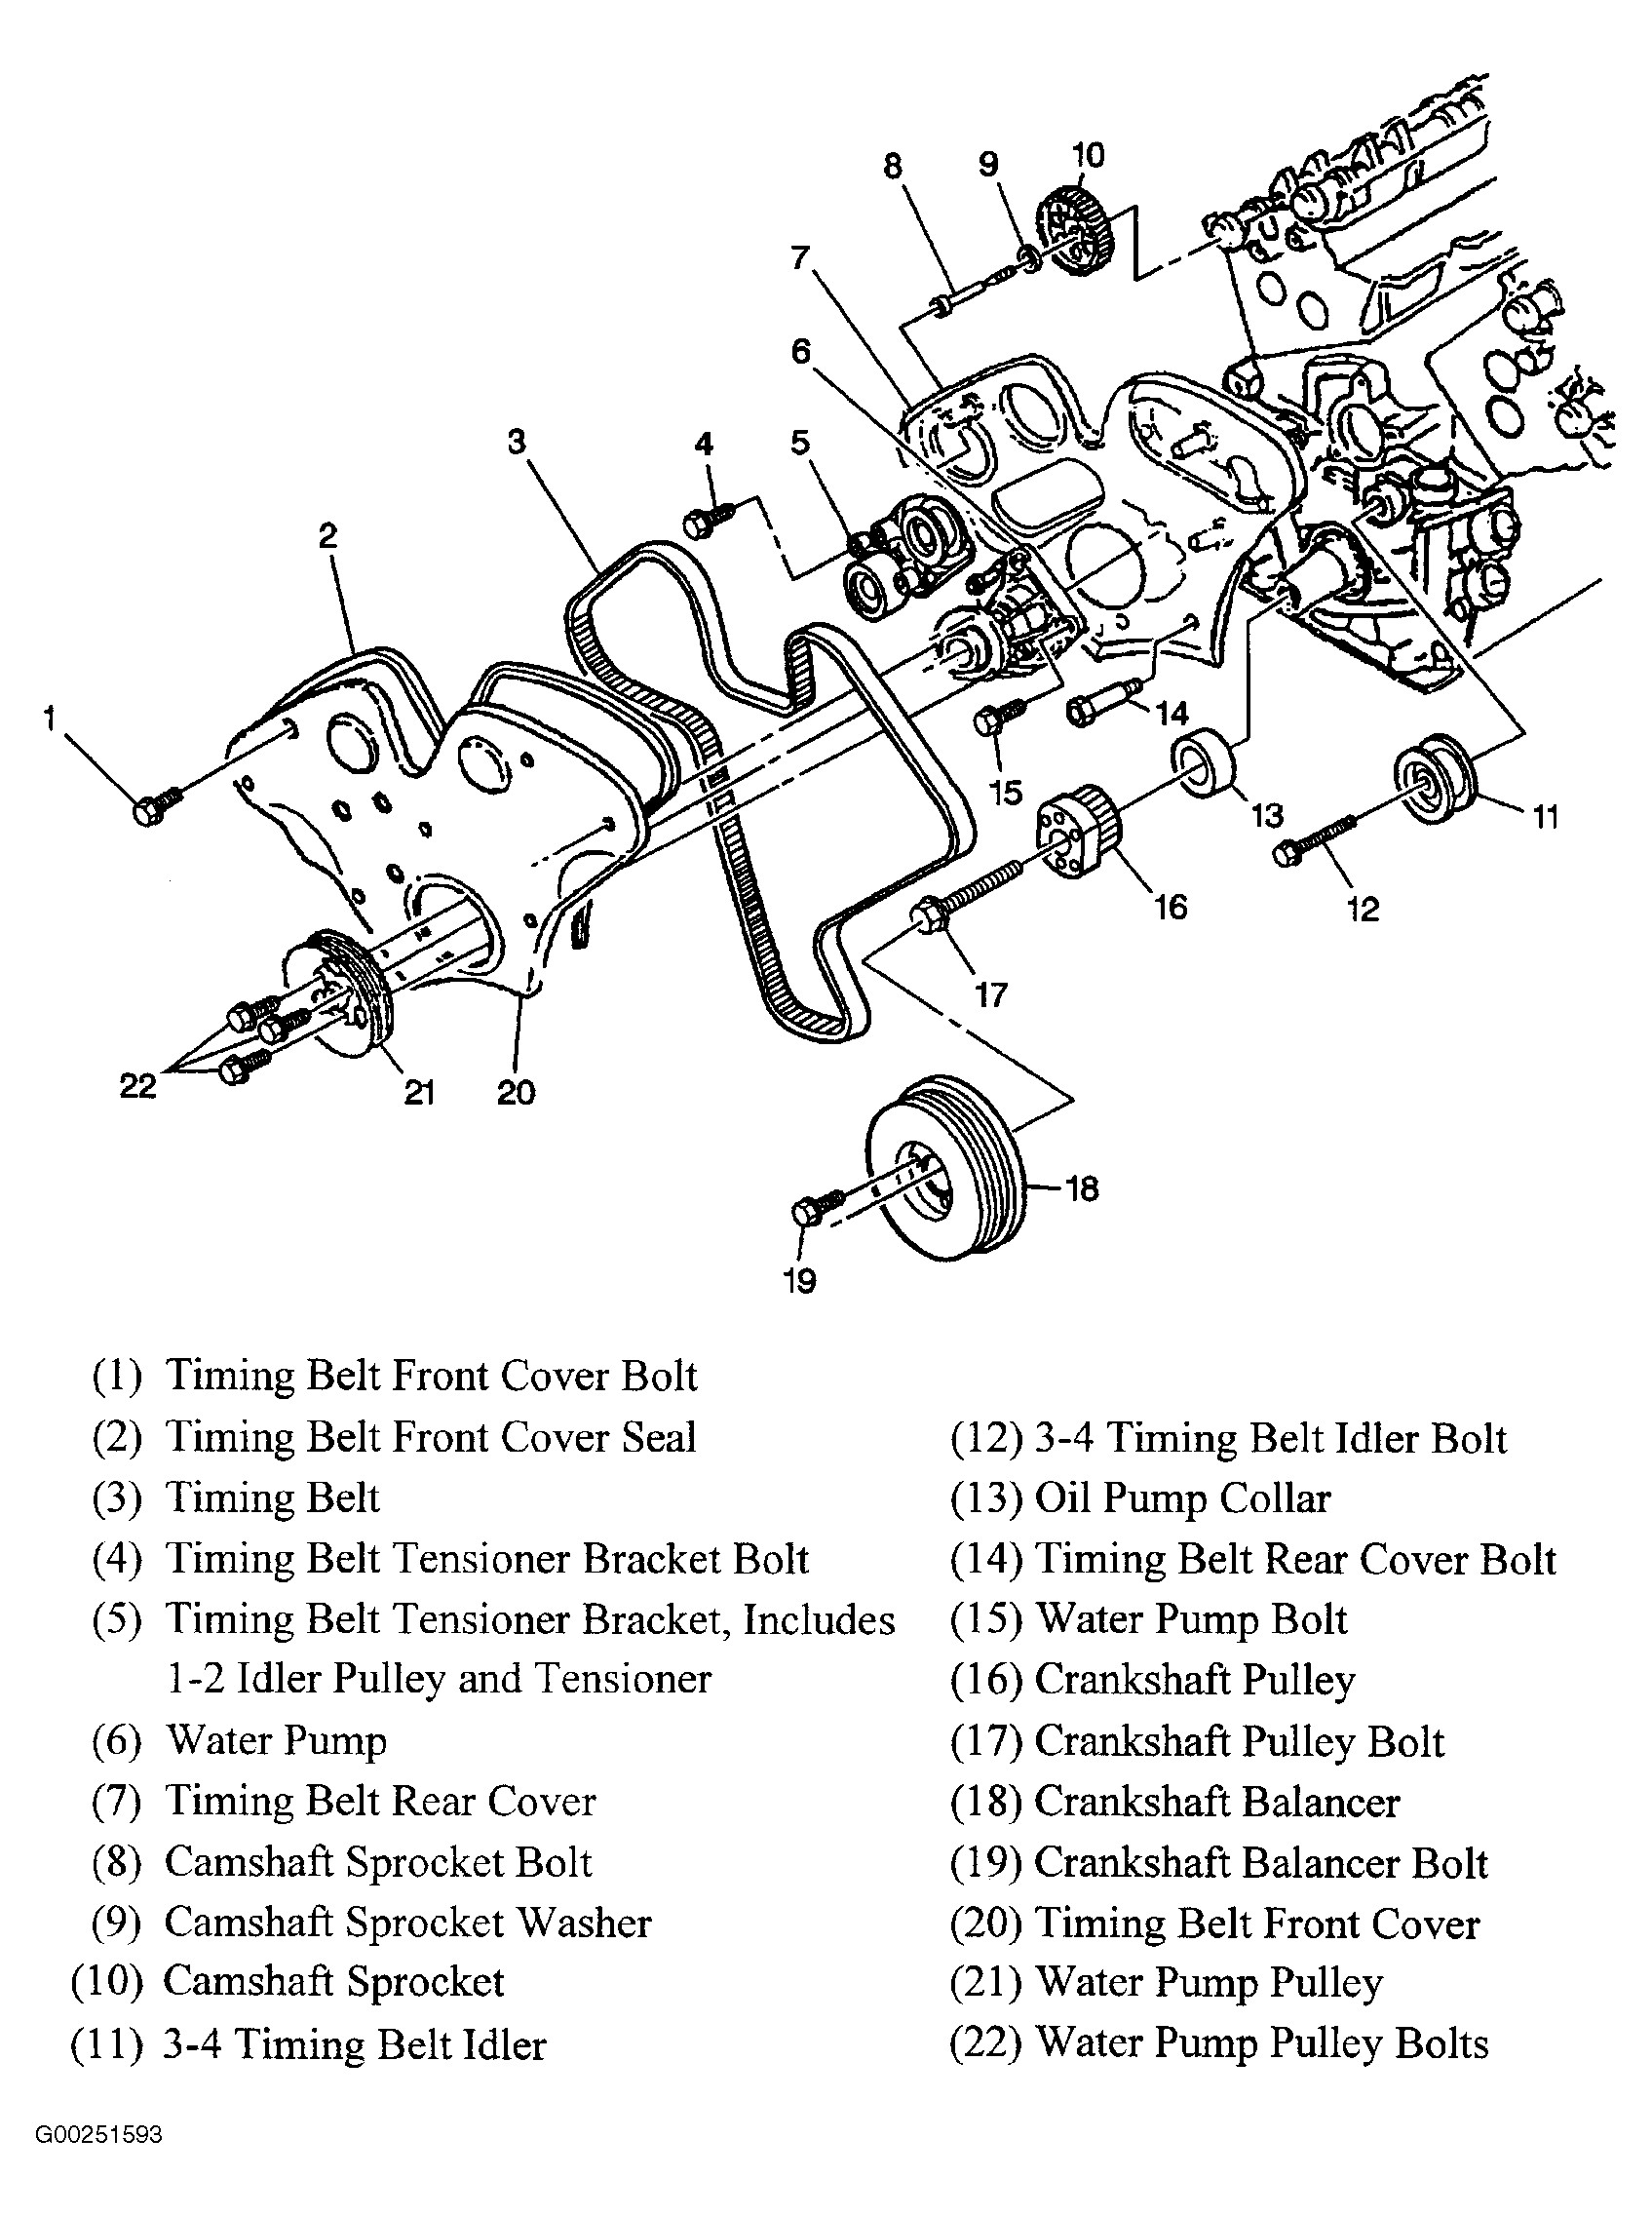 Car Interior Parts Diagram 2003 Cadillac Cts Serpentine Belt Diagram Auto Of Car Interior Parts Diagram